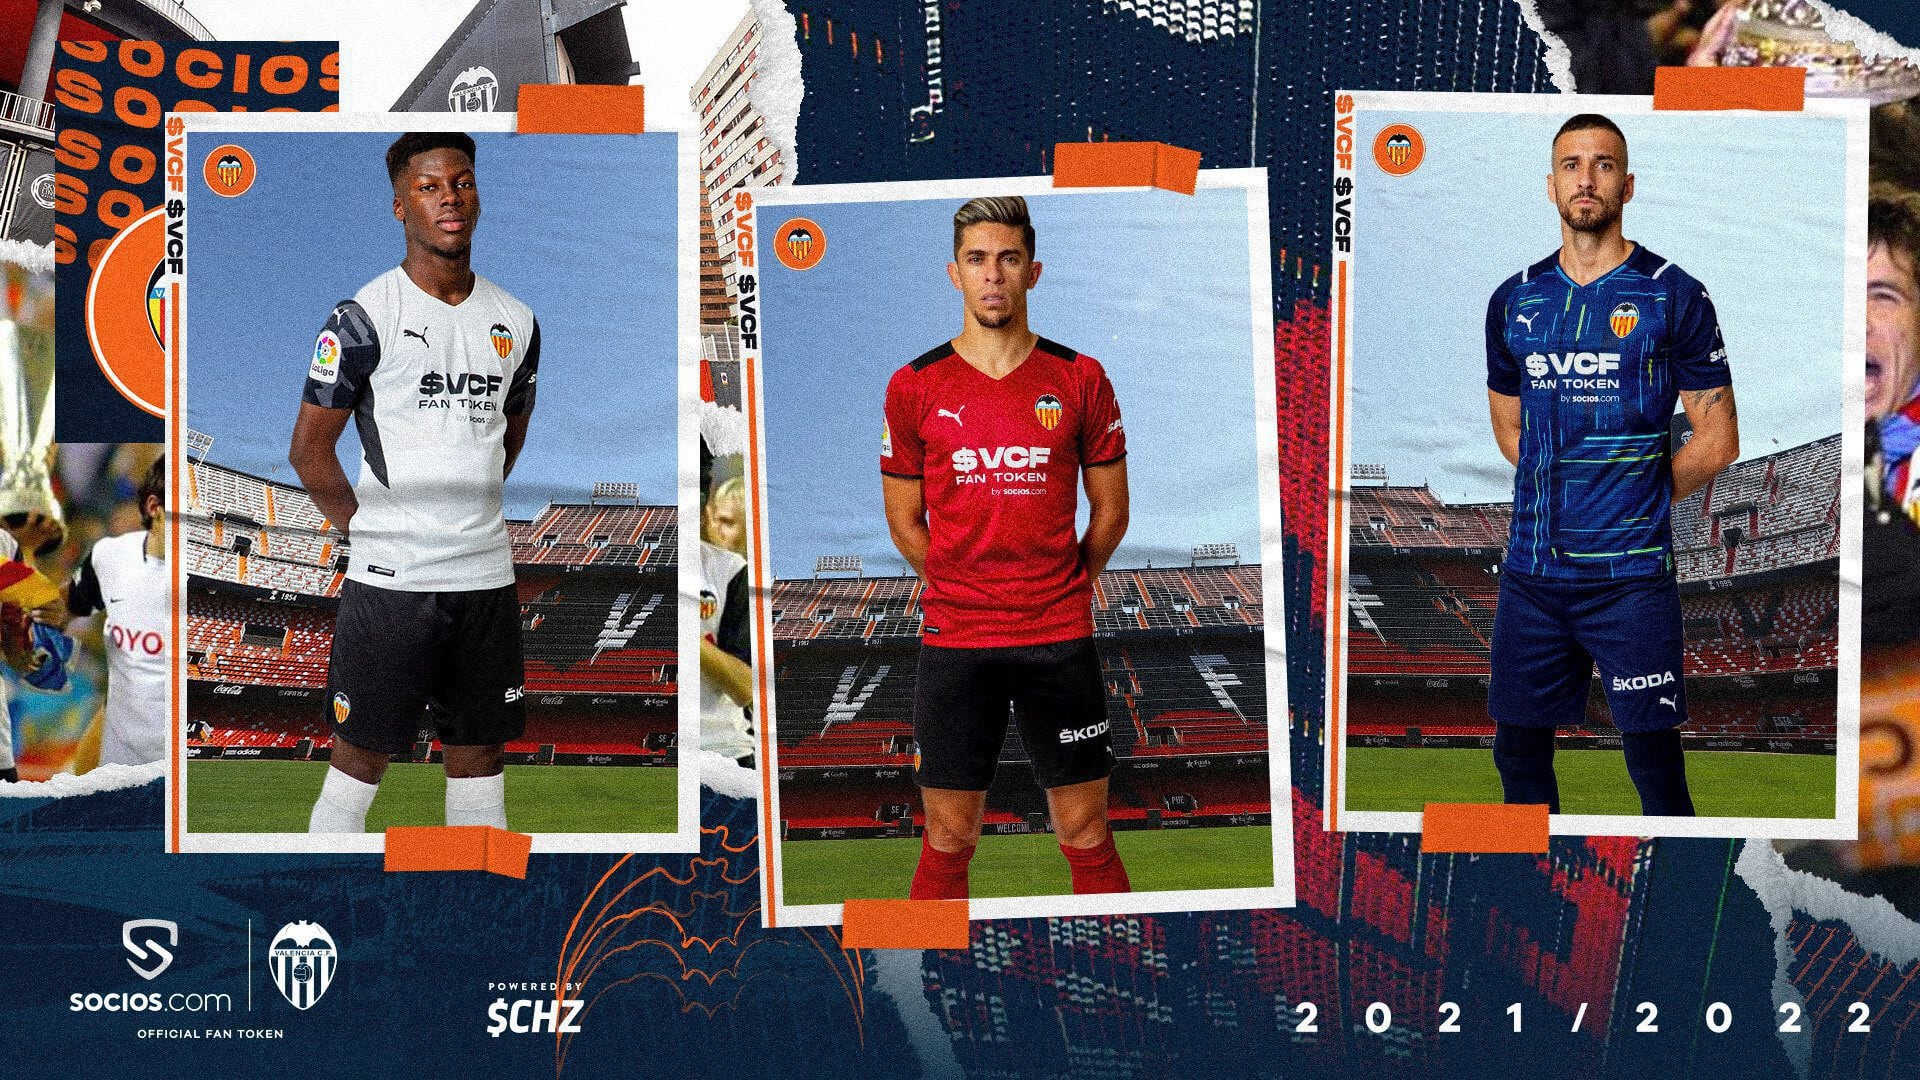 Valencia Cf Launch 2021/22 Kit As Players Wear Shirt Featuring $VCF Fan ...